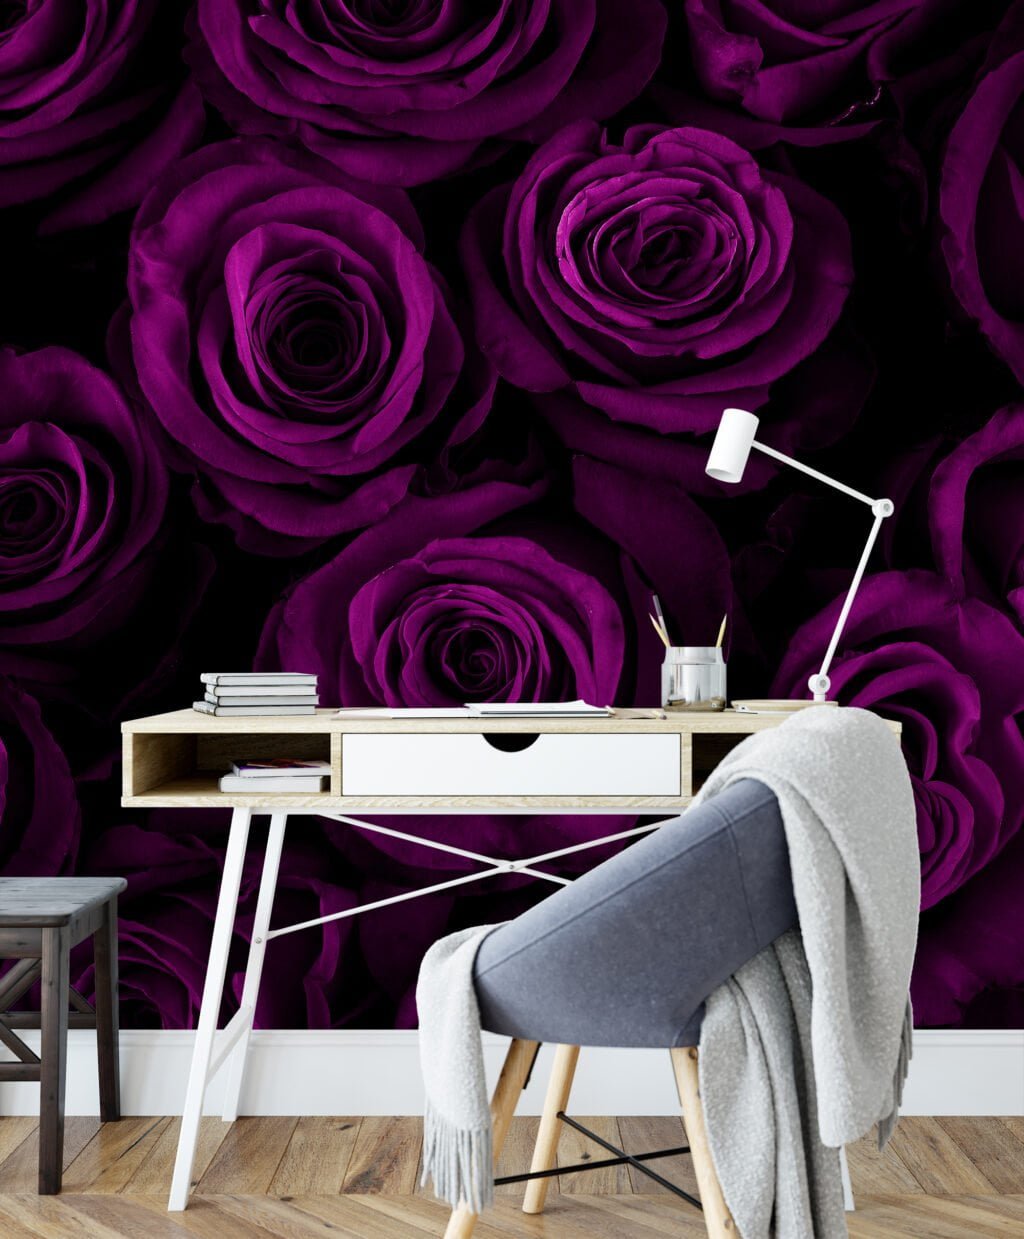 Floral Deep Purple Roses Wallpaper, Midnight Velvet Roses Peel & Stick Wall Mural